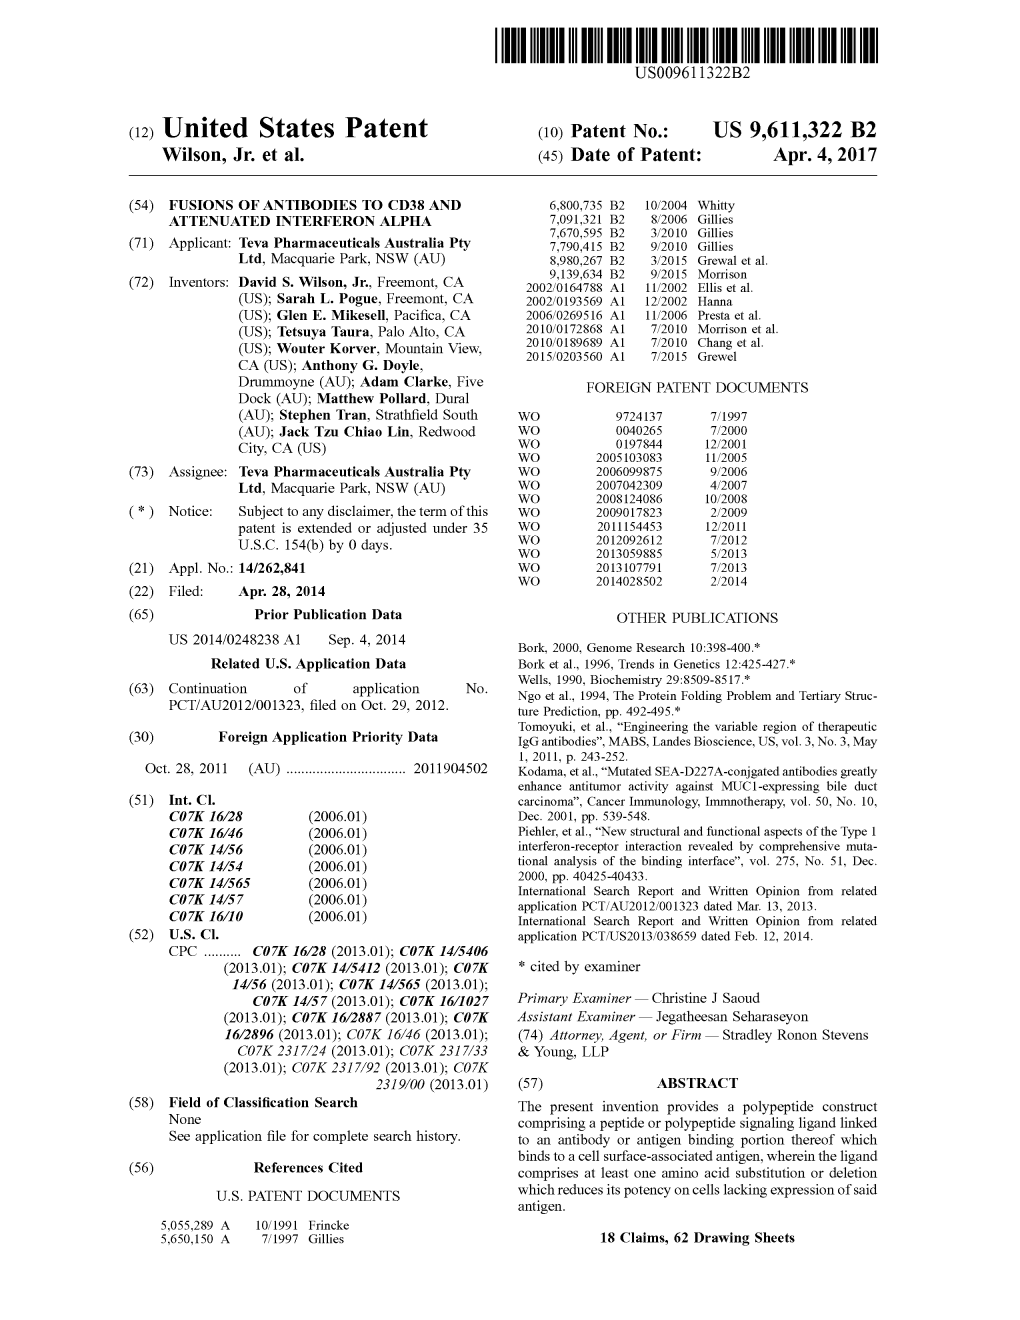 (12) United States Patent (10) Patent No.: US 9,611,322 B2 Wilson, Jr